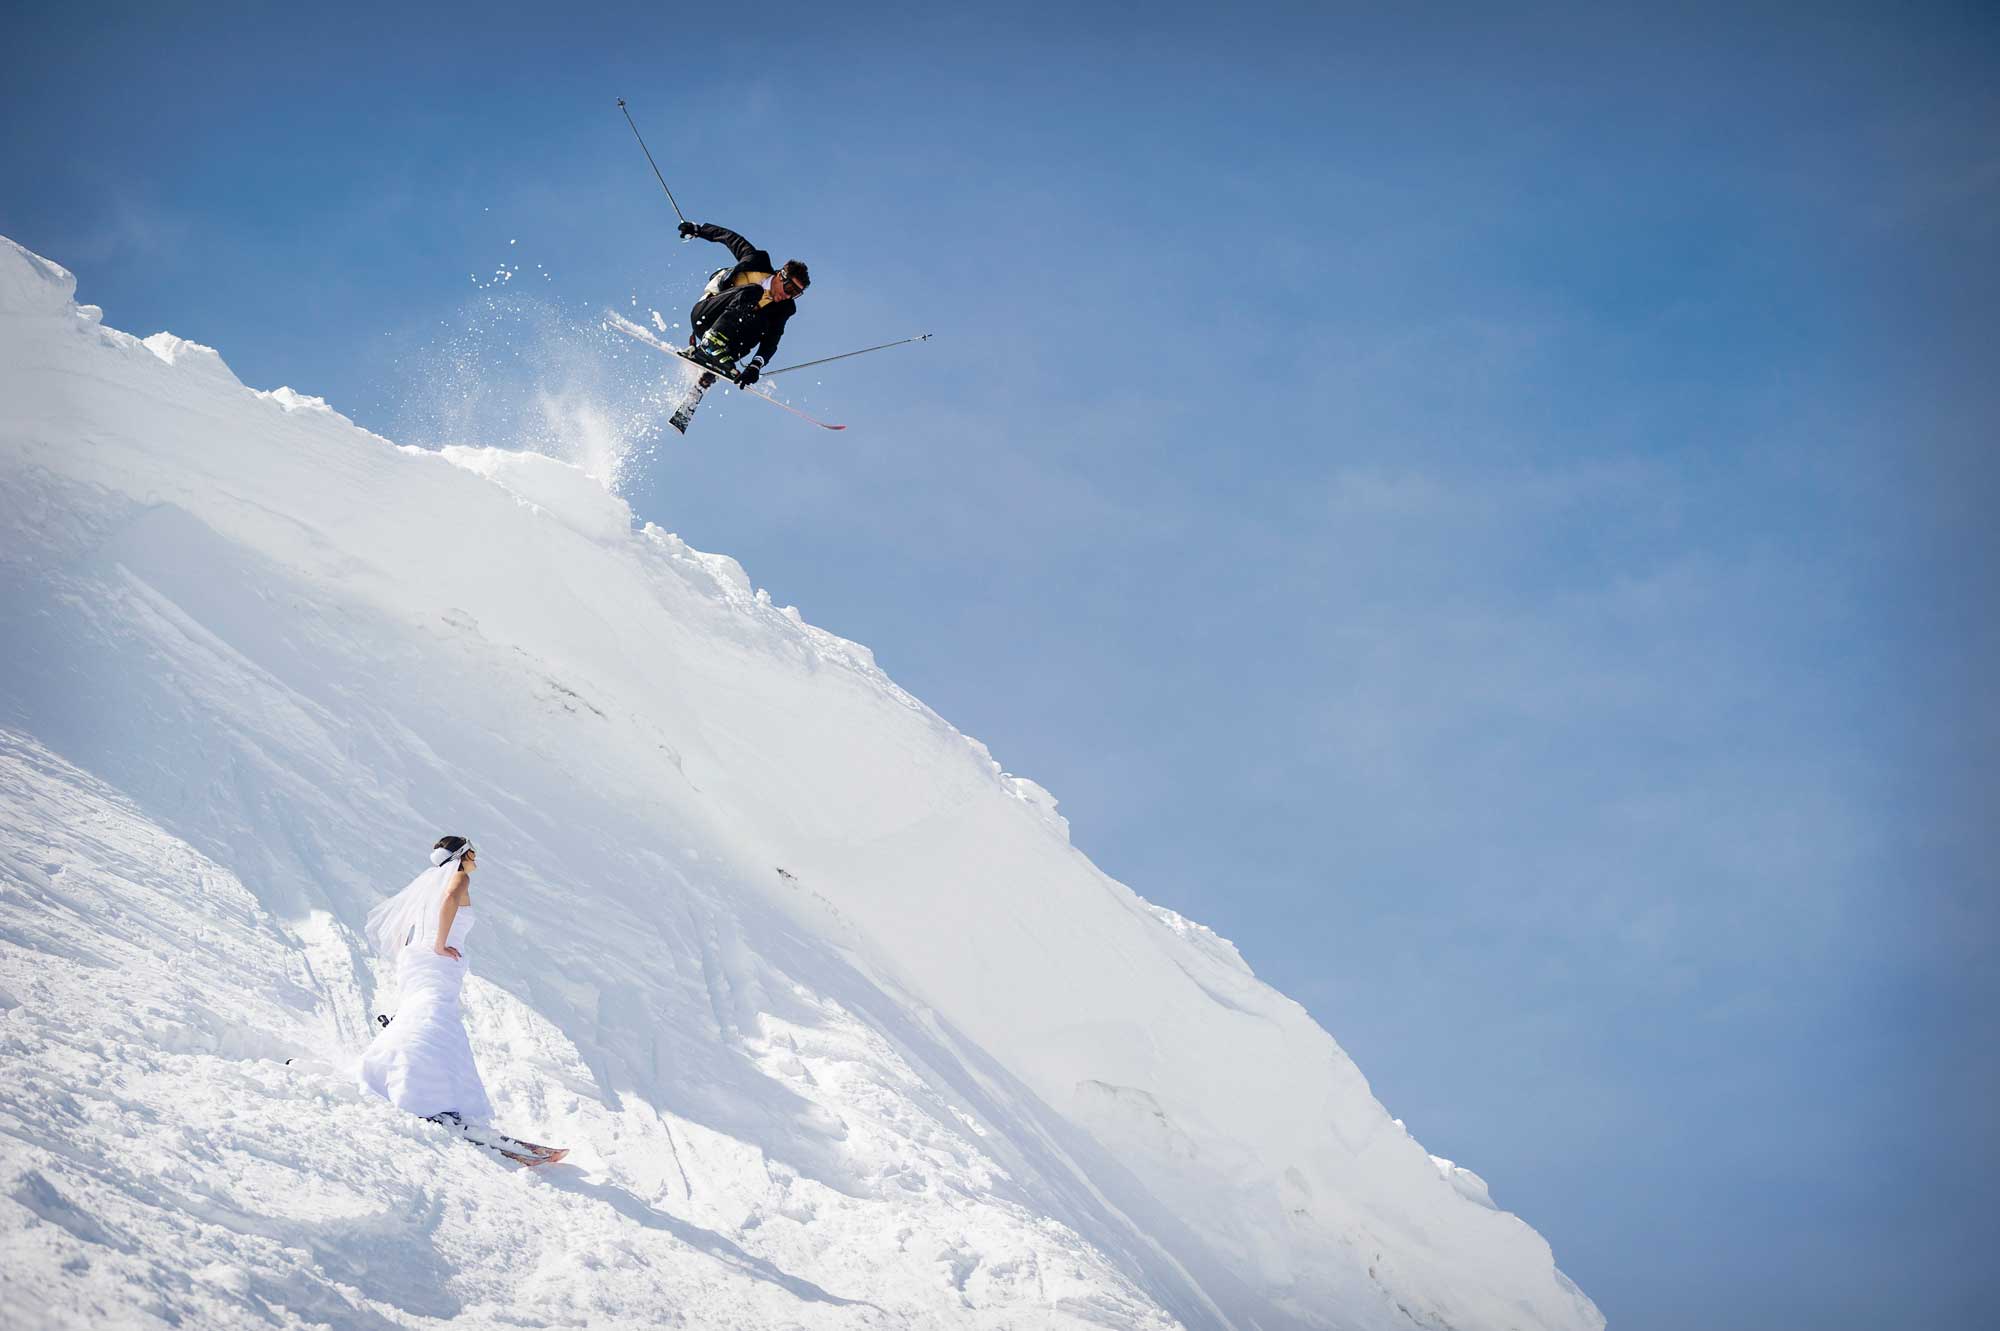 Adventure ski wedding photography of groom jumping over bride on skis